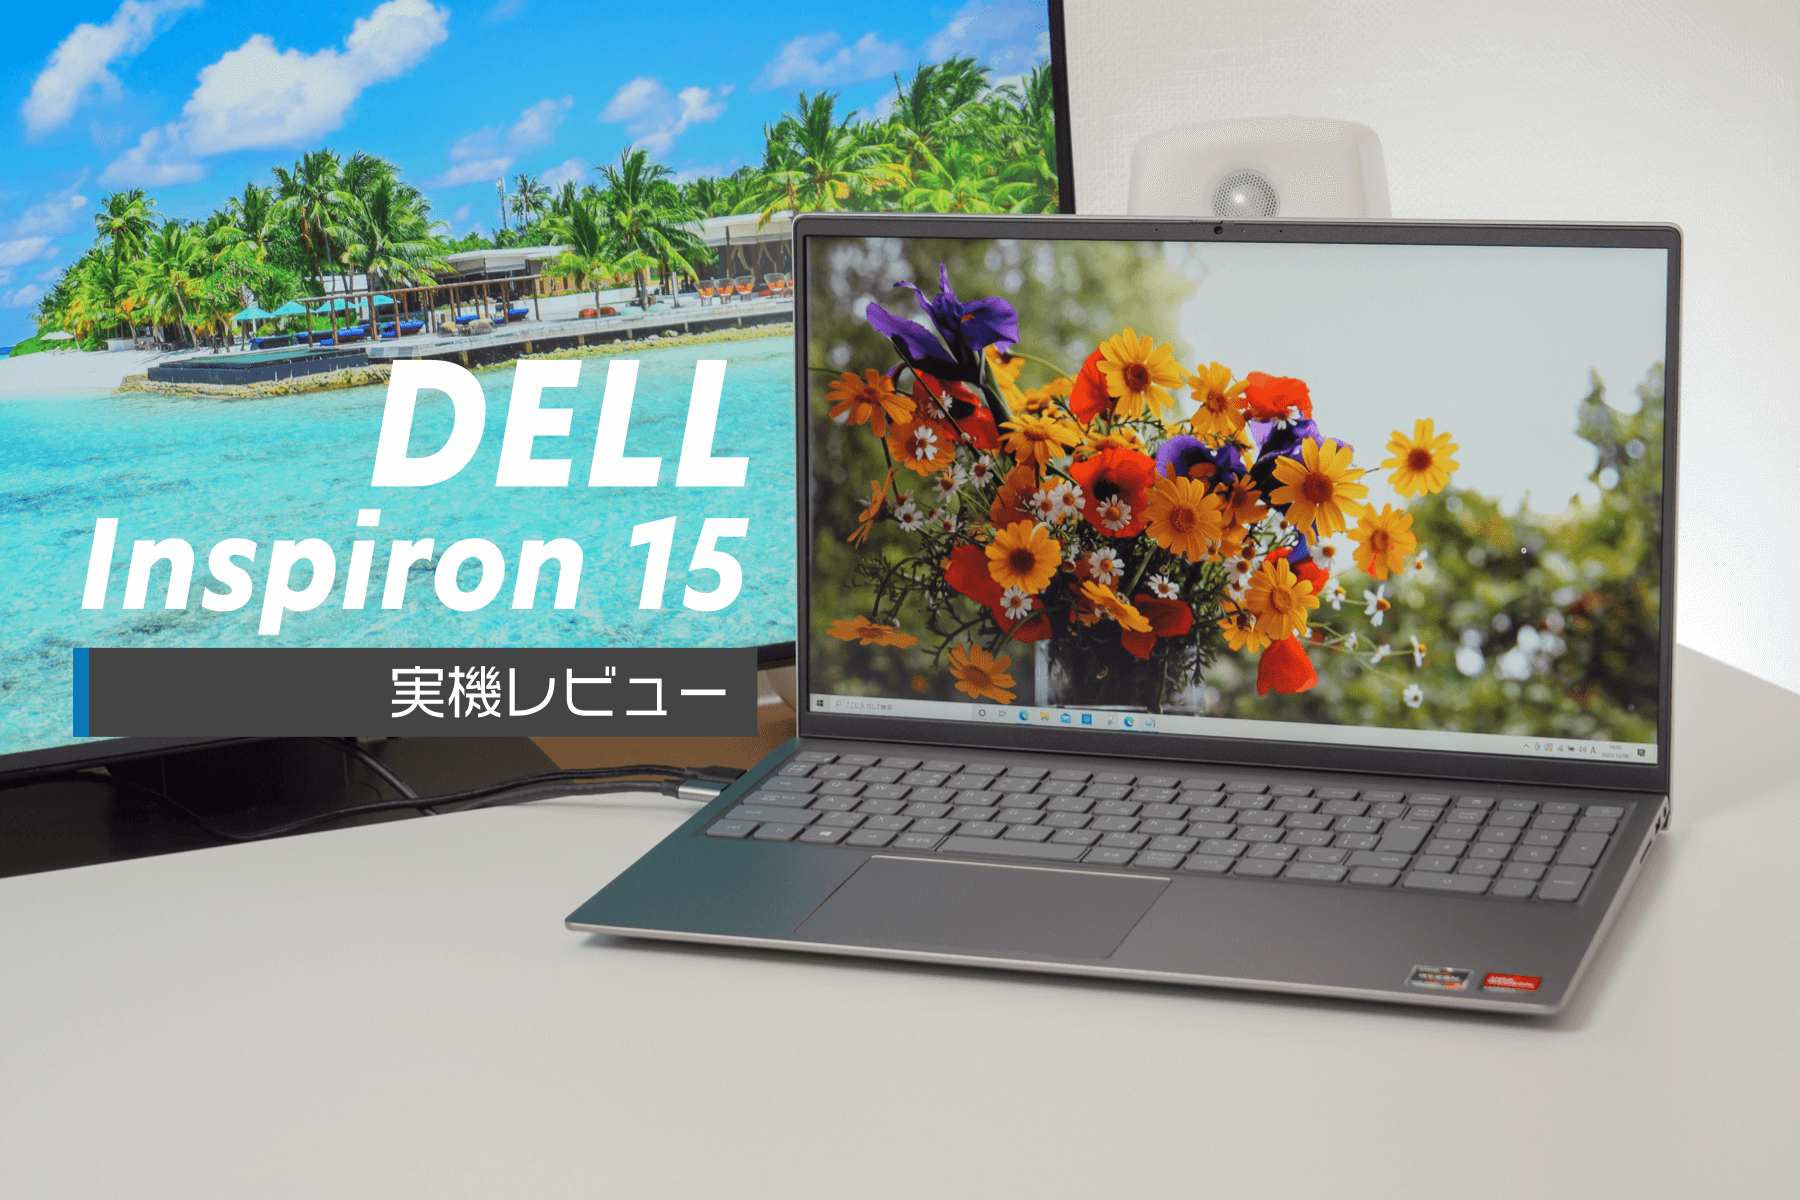 Dell Inspiron 15 (5155) レビュー。10万円以下で買える据え置き型ノートパソコンに最適なコスパの高い端末！